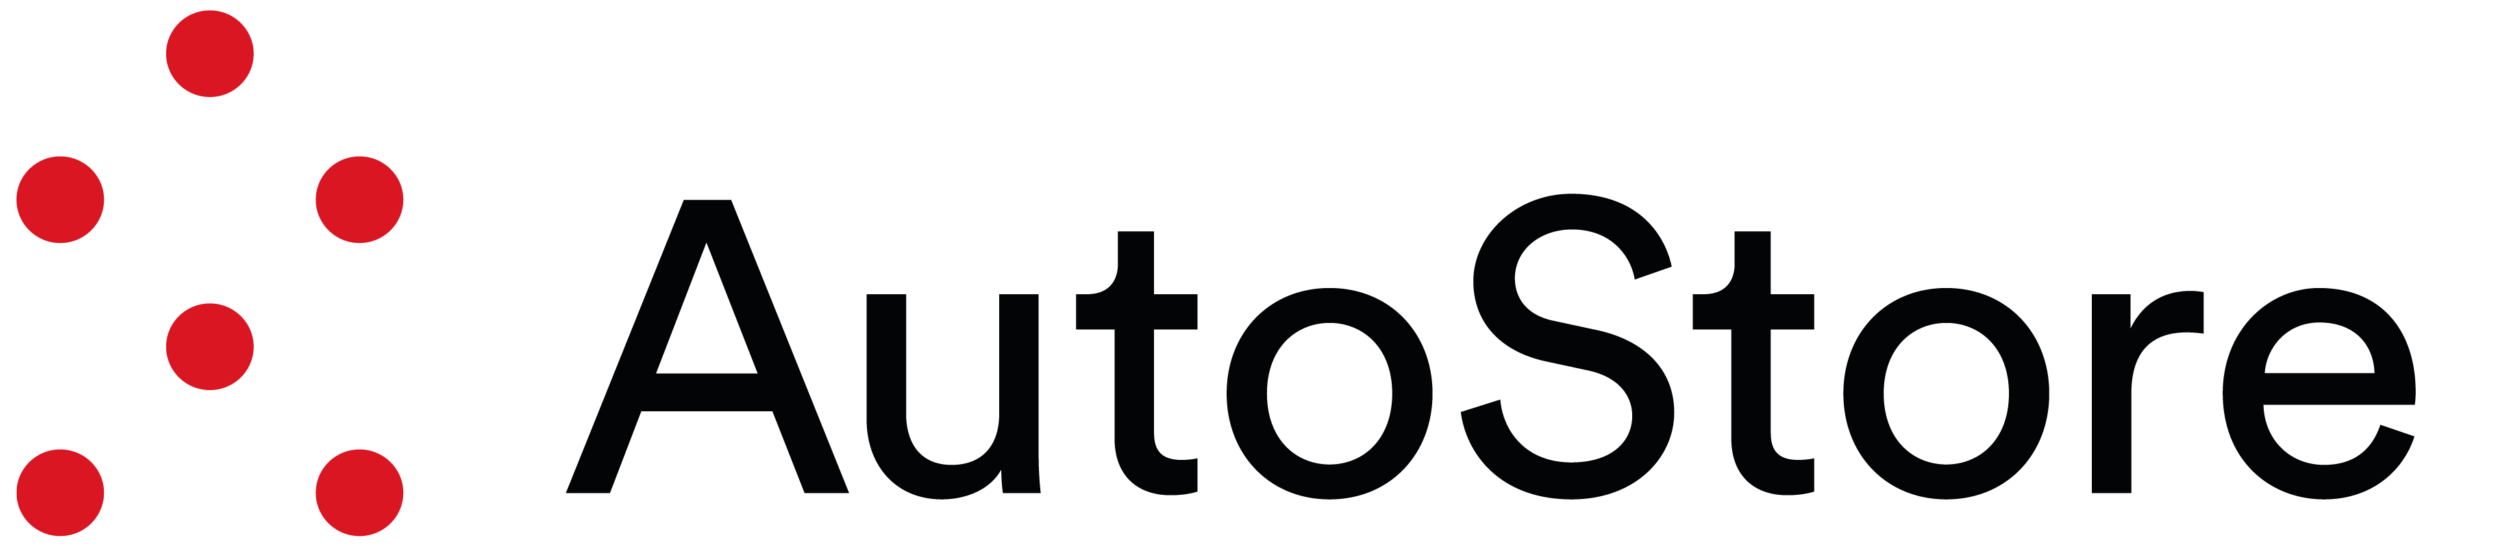 Vision Fund investment portfolio company AutoStore's logo